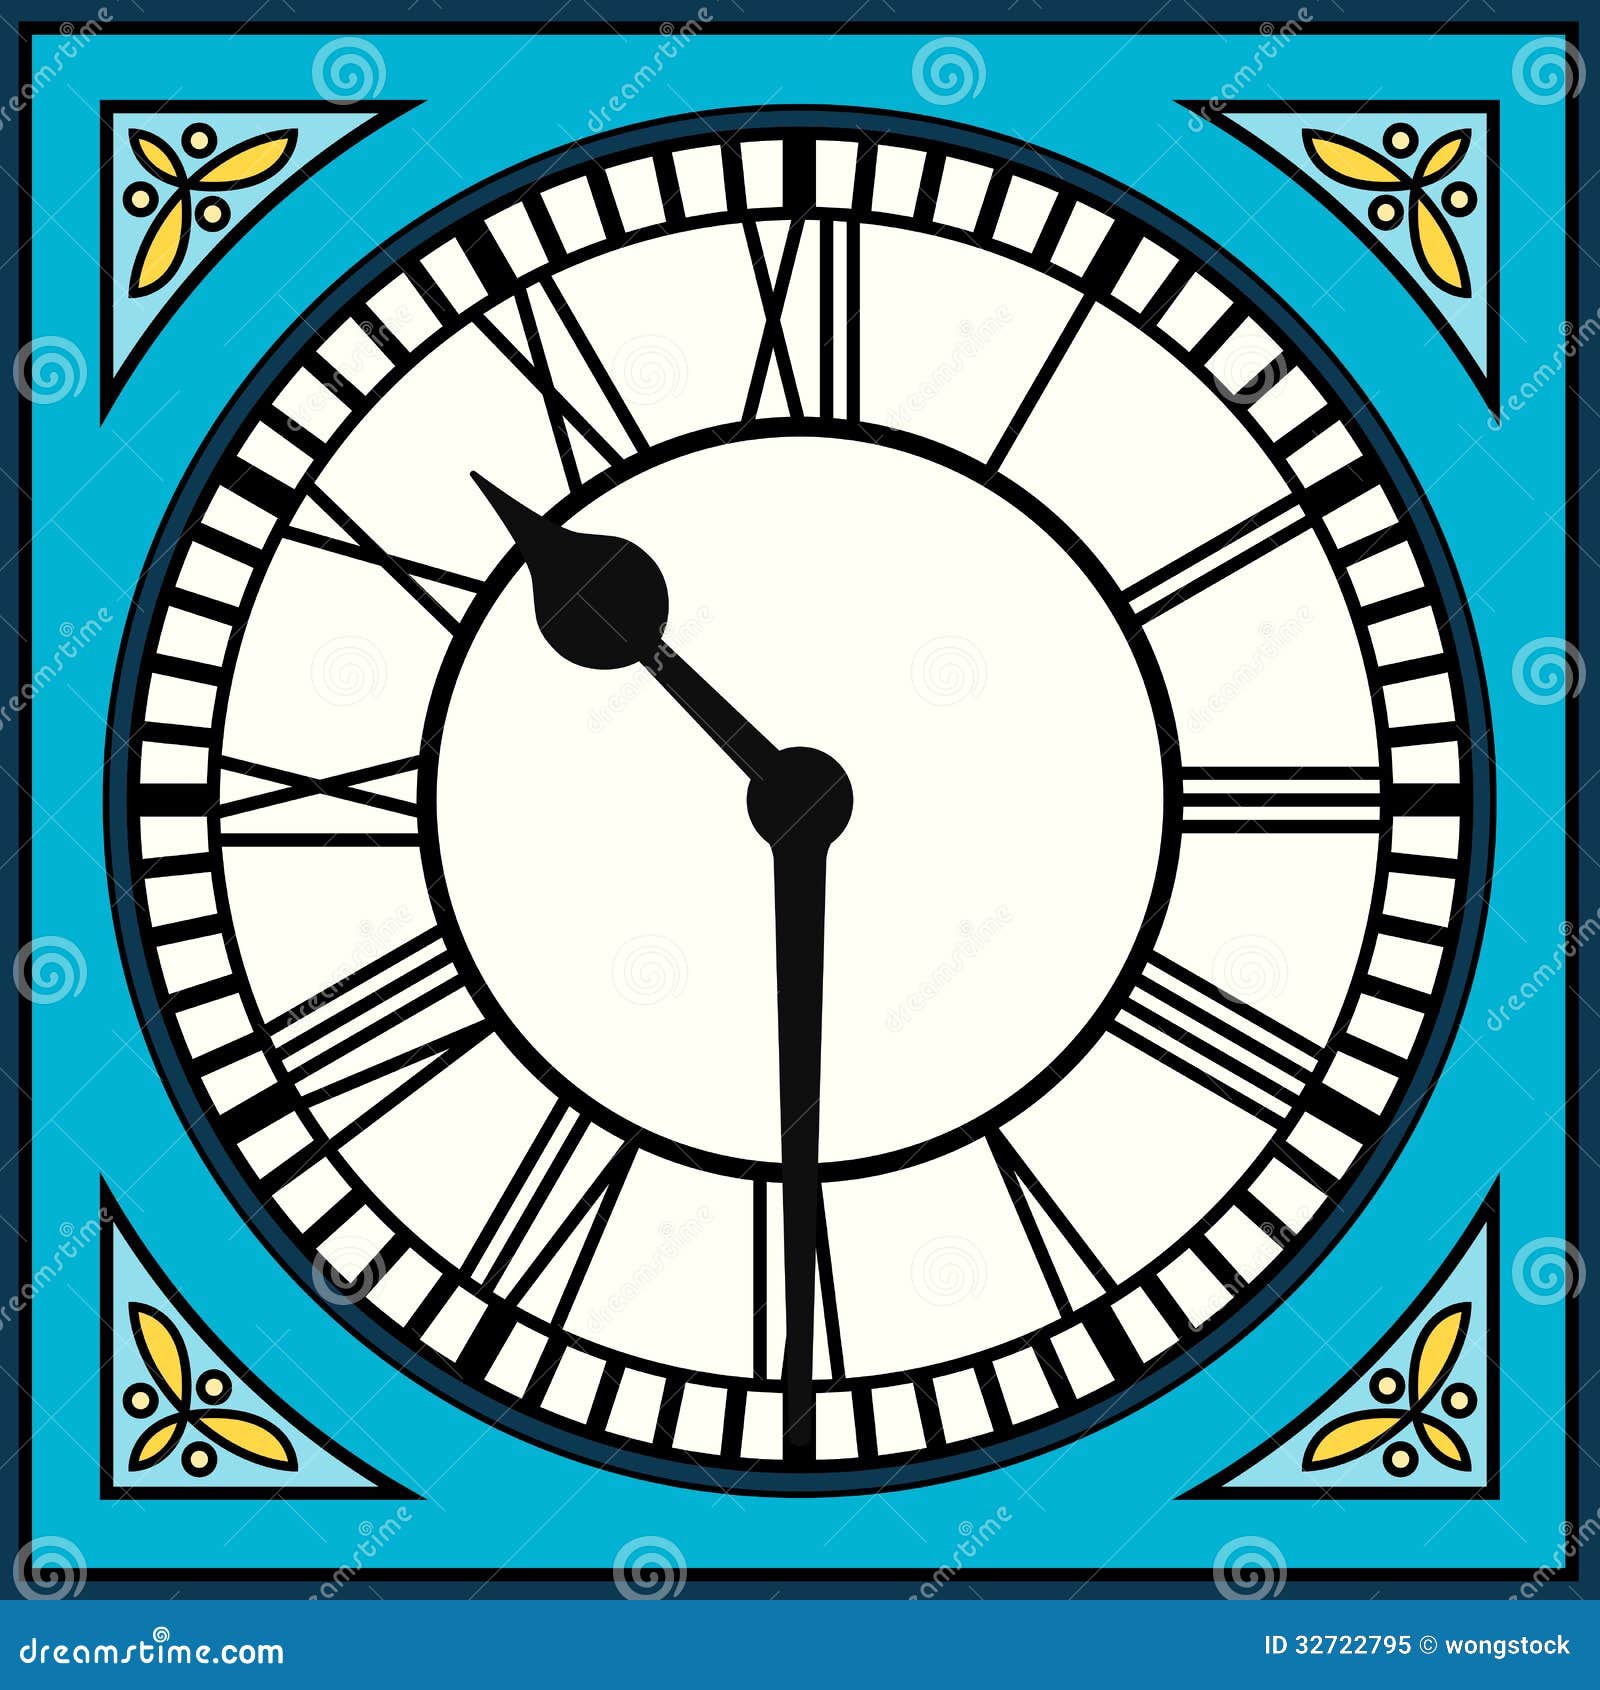 roman numeral clock at half past ten